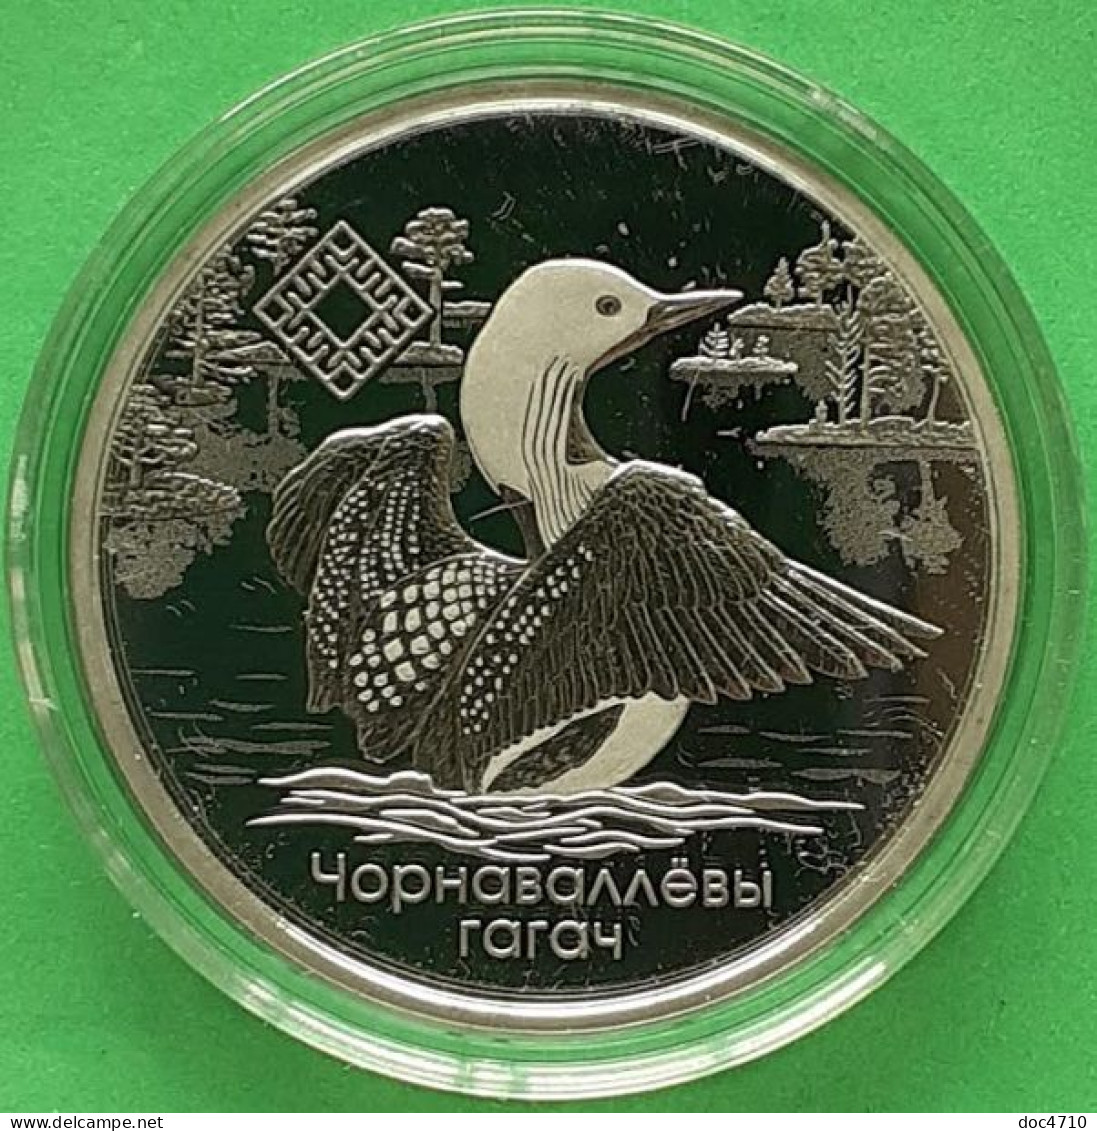 Belarus 1 Ruble 2021, Yelnya Reserve, Arctic Marlin Bird, KM#699, Prooflike - Belarus